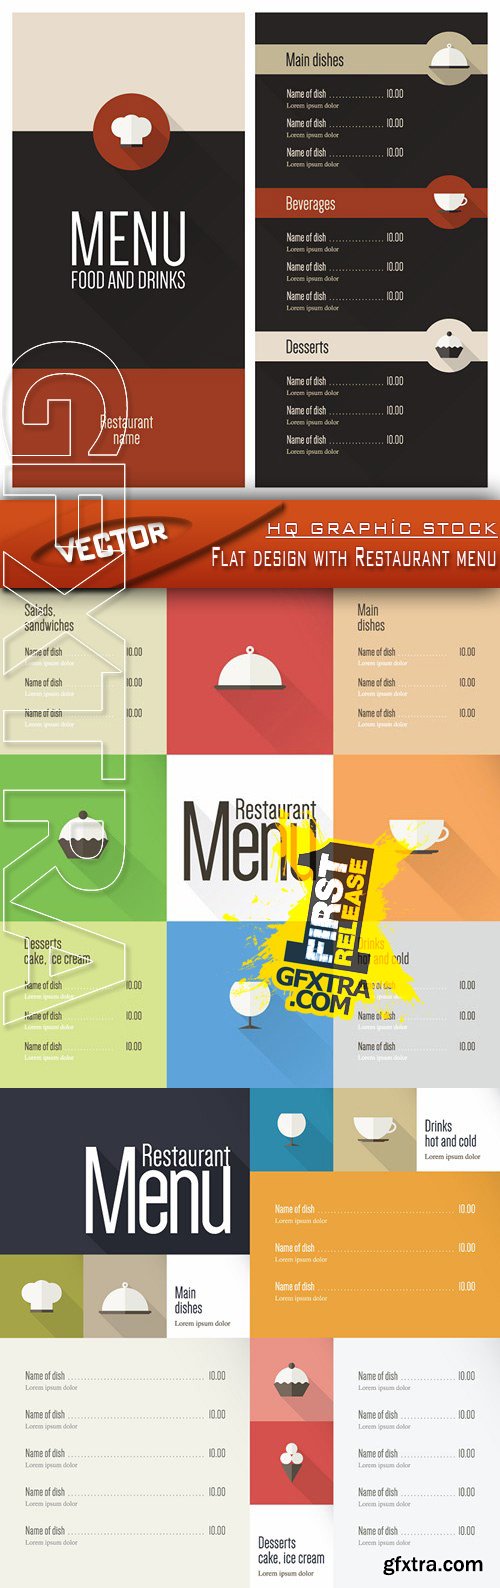 Stock Vector - Flat design with Restaurant menu